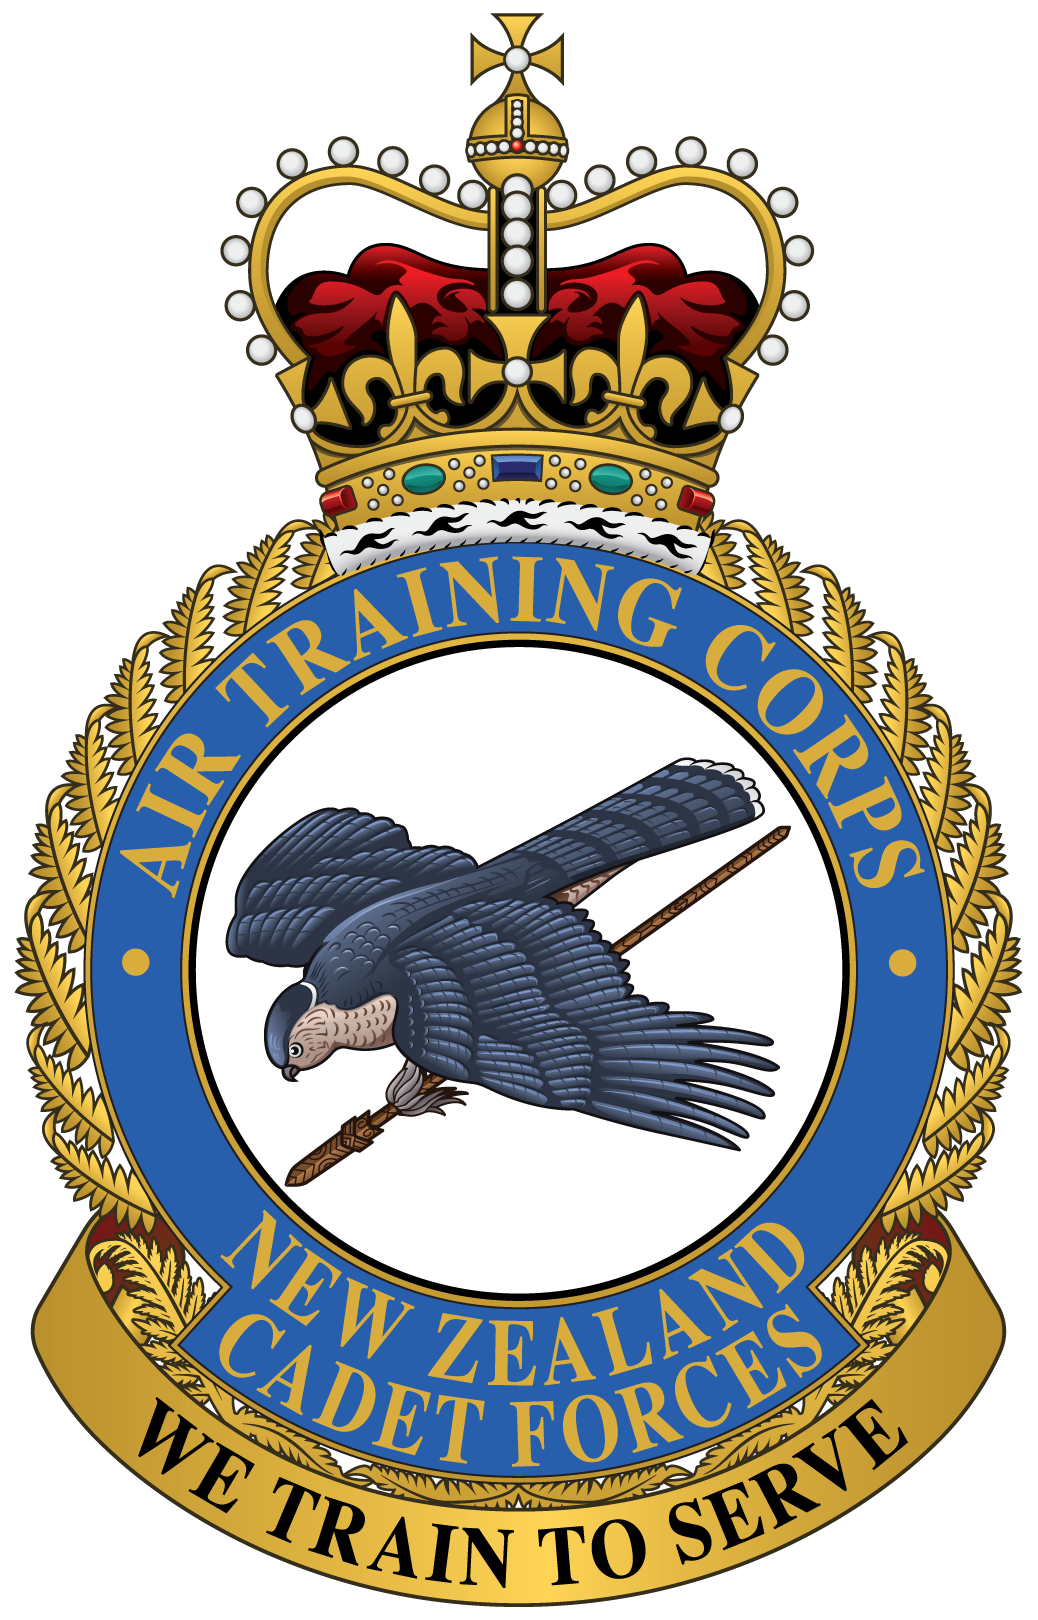 Air cadets crest